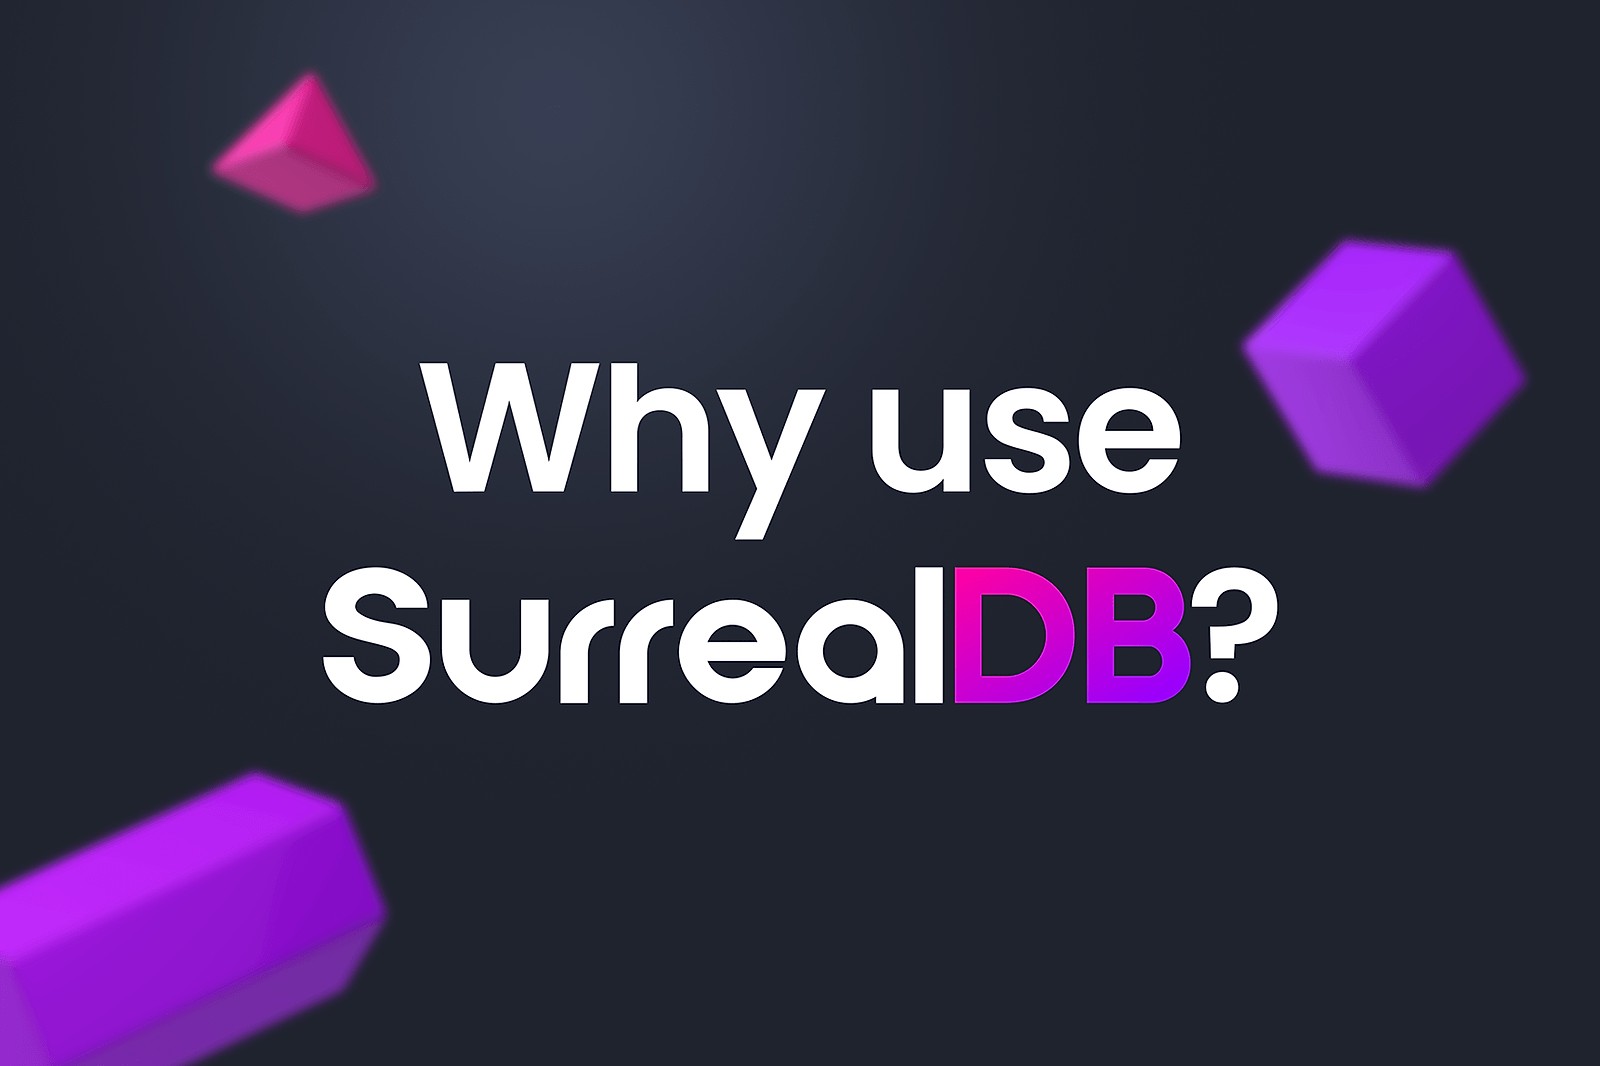 Why use SurrealDB?